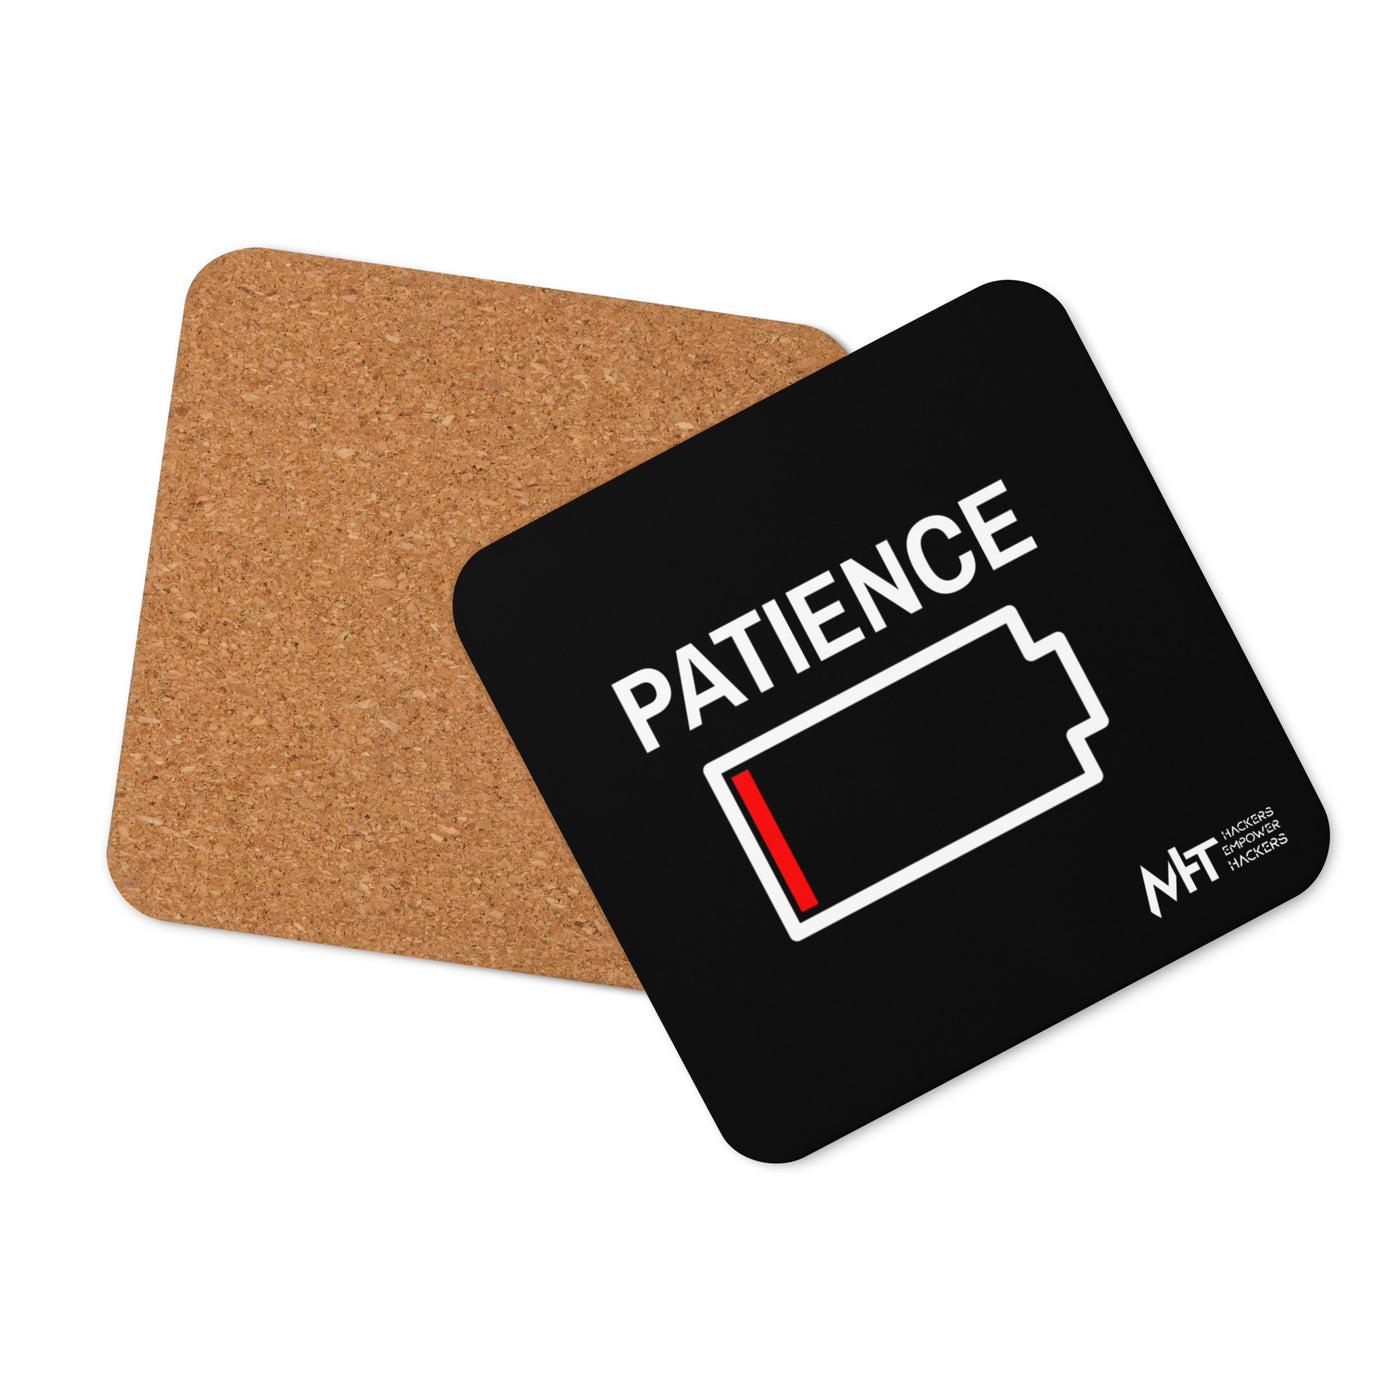 Patience - Cork-back coaster